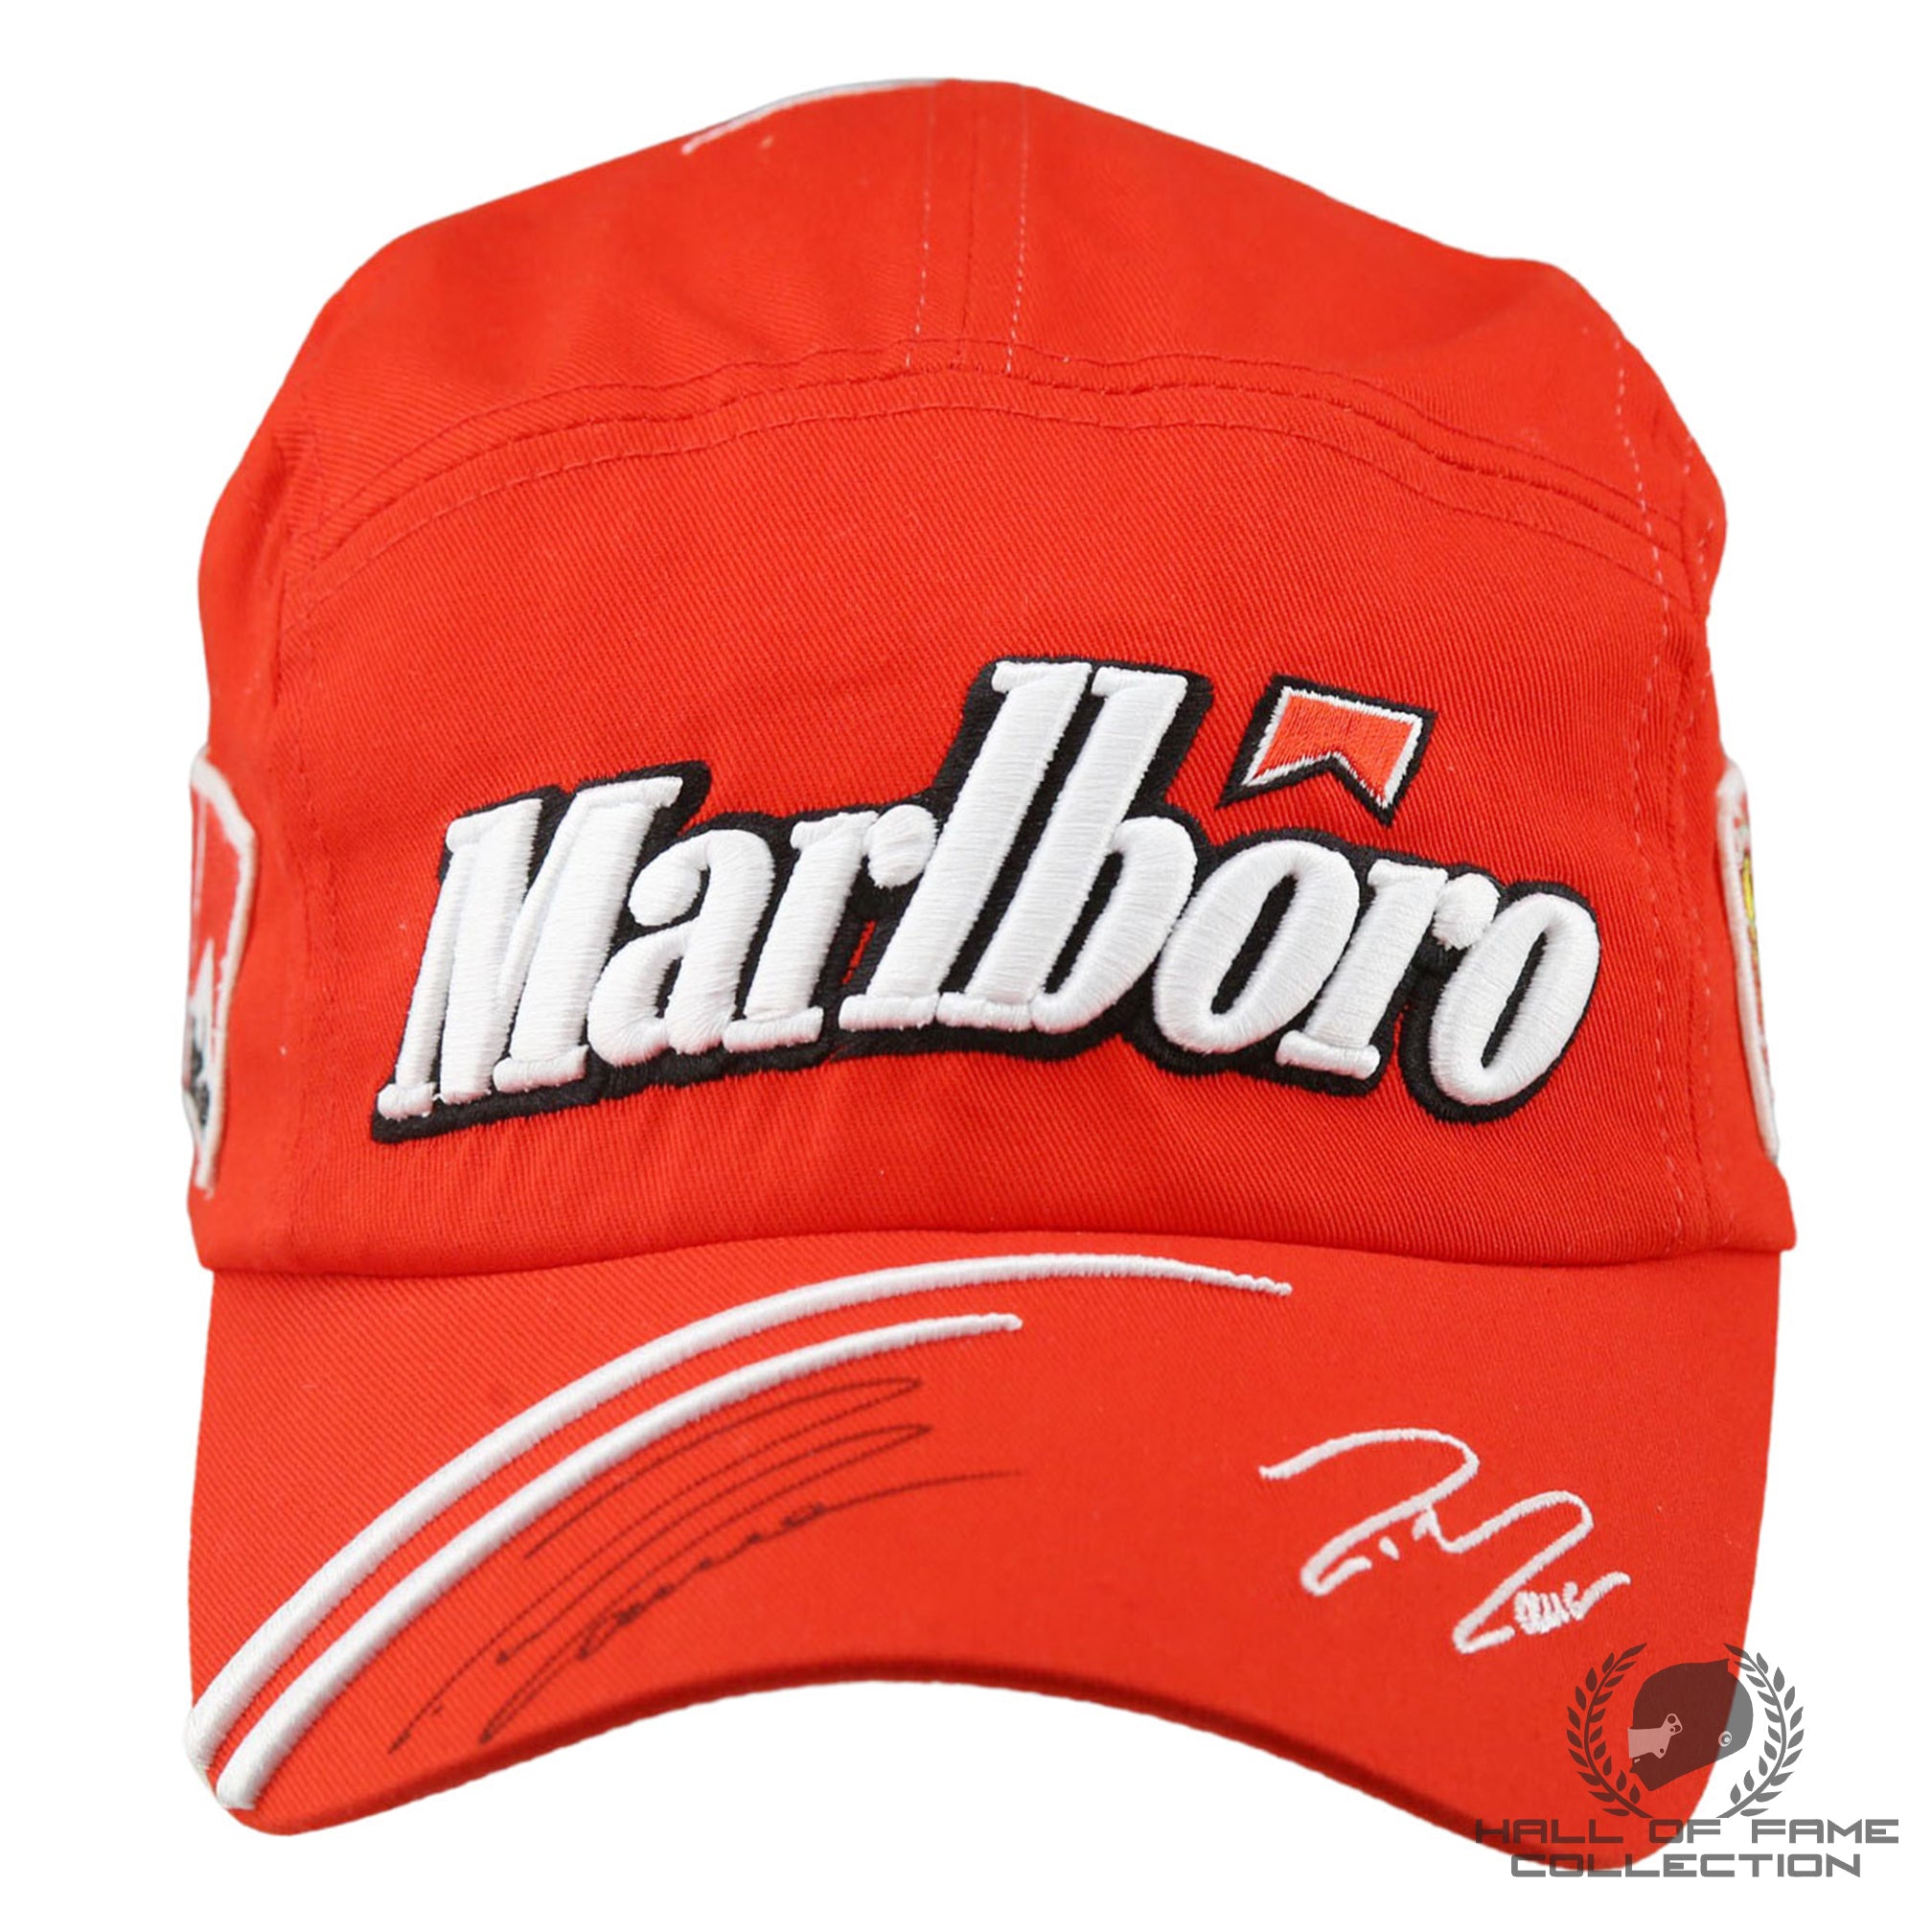 Felipe Massa Signed Official Scuderia Marlboro Ferrari F1 Hat